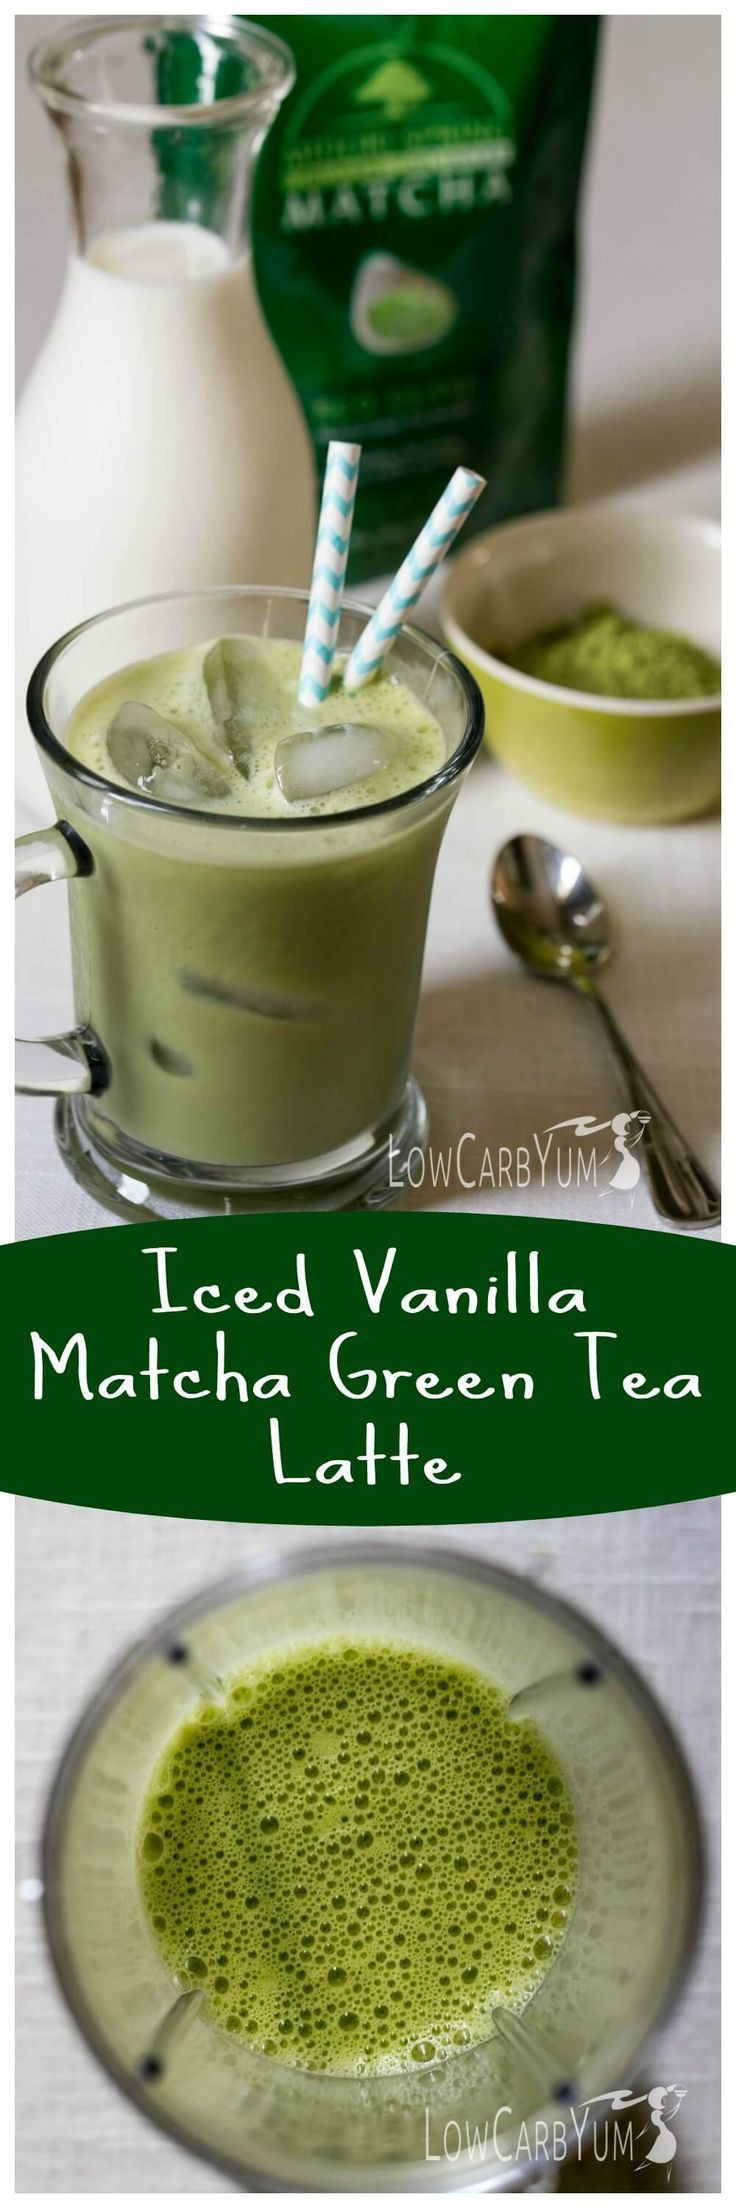 Low Carb Coffee Drinks Recipes
 Iced Vanilla Matcha Green Tea Latte Recipe